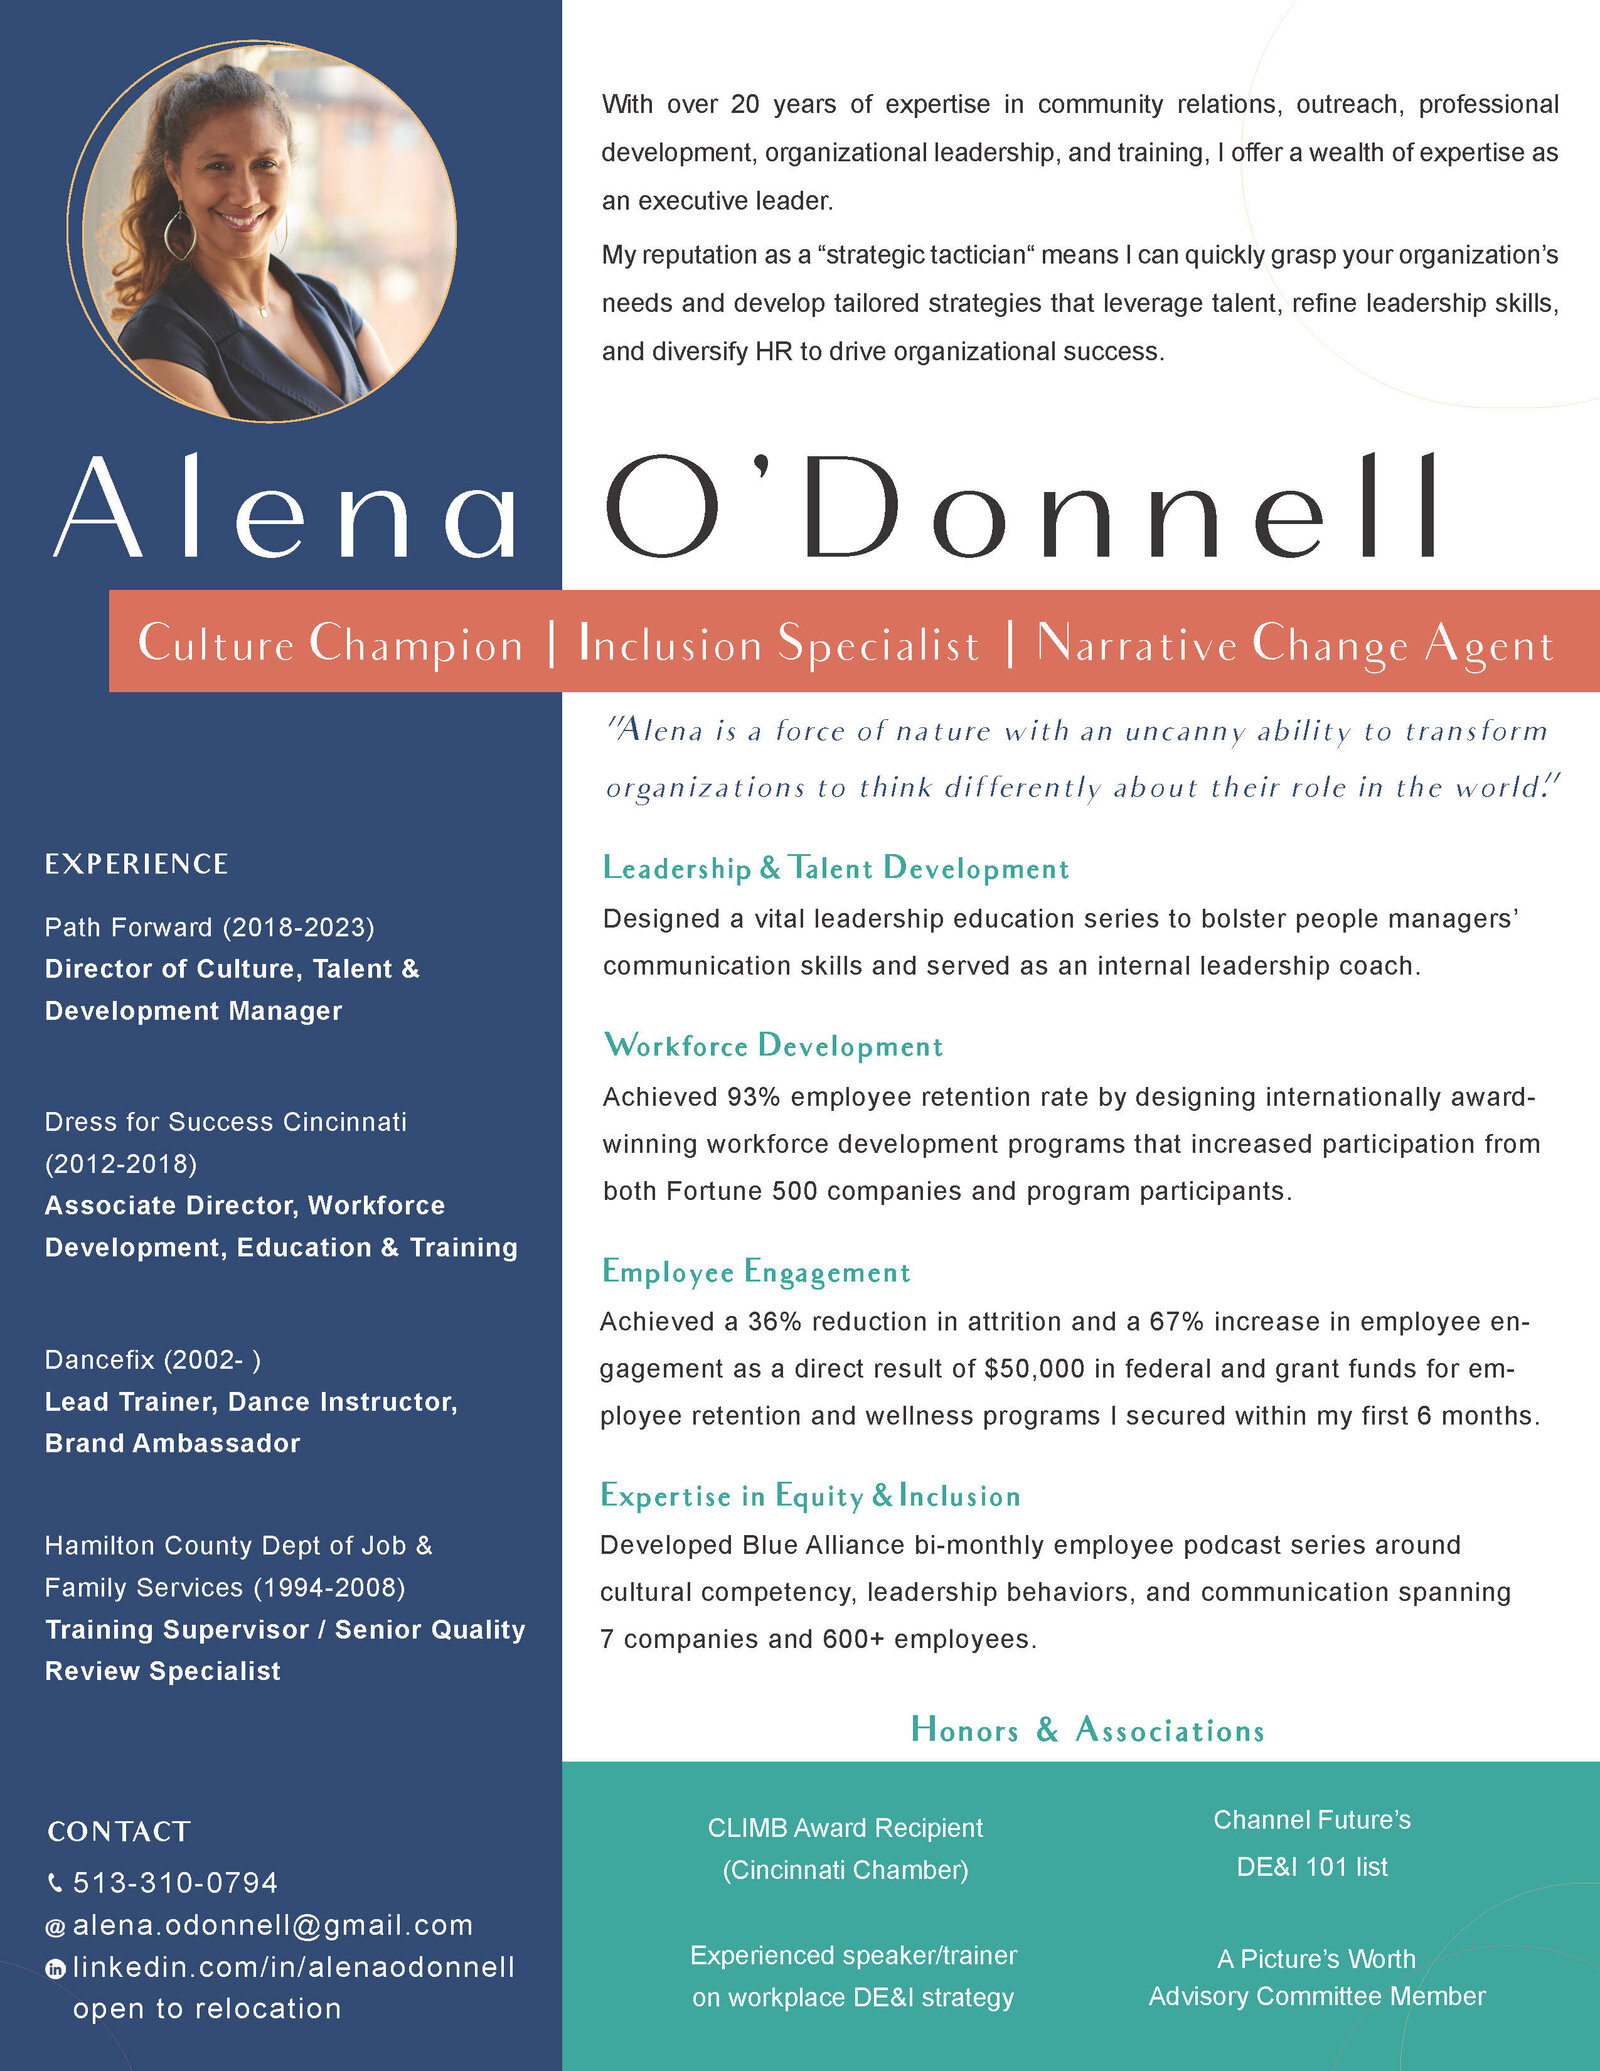 Alena ODonnell Professional Spotlight - FINAL